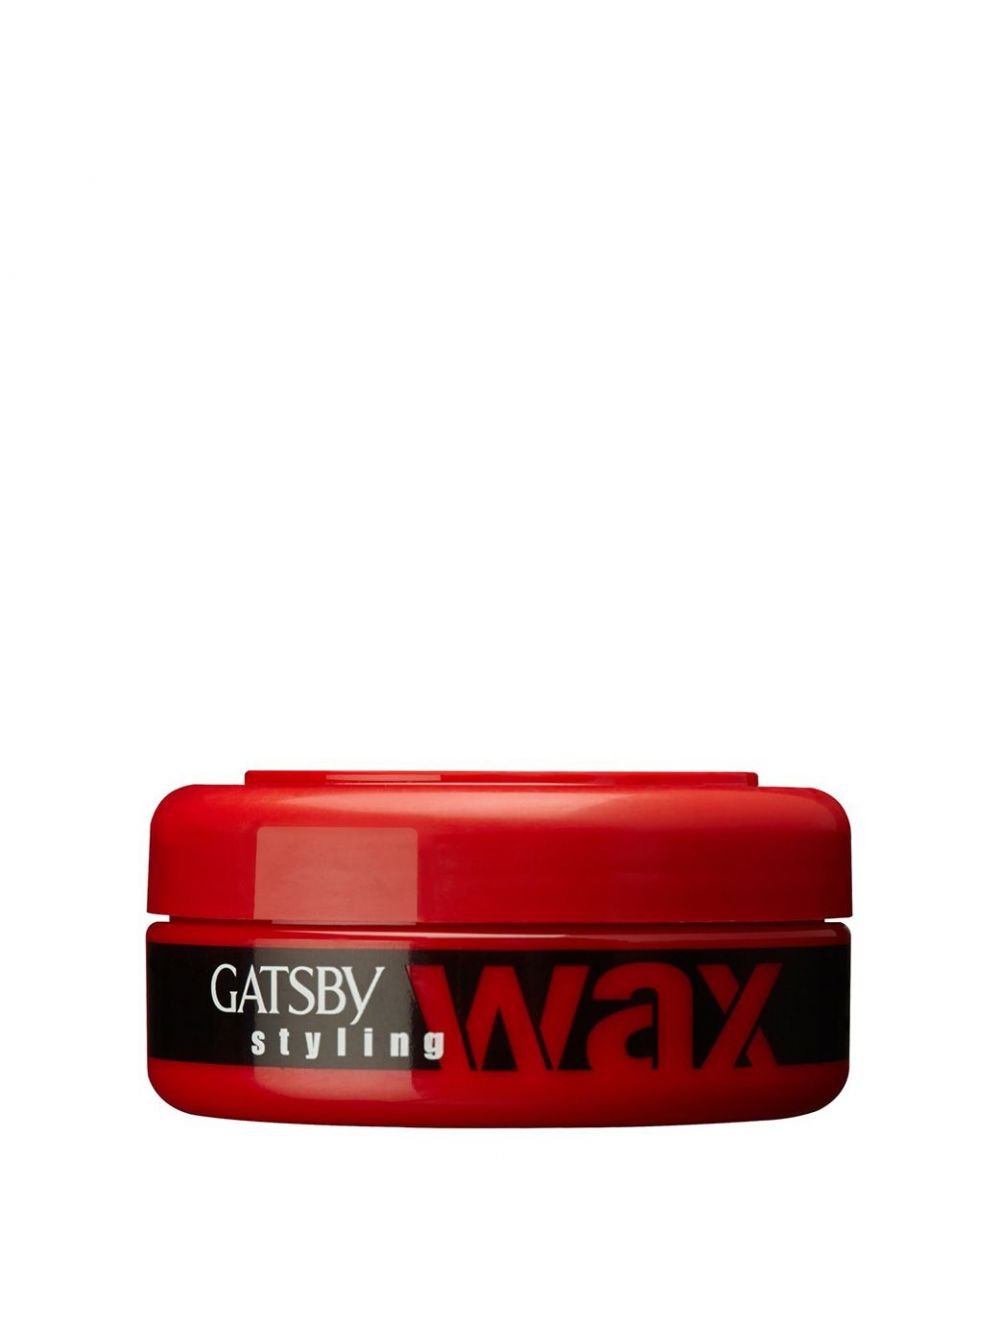 Gatsby Hair Styling Fiber Wax - Power & Spikes (25gm) - Niram